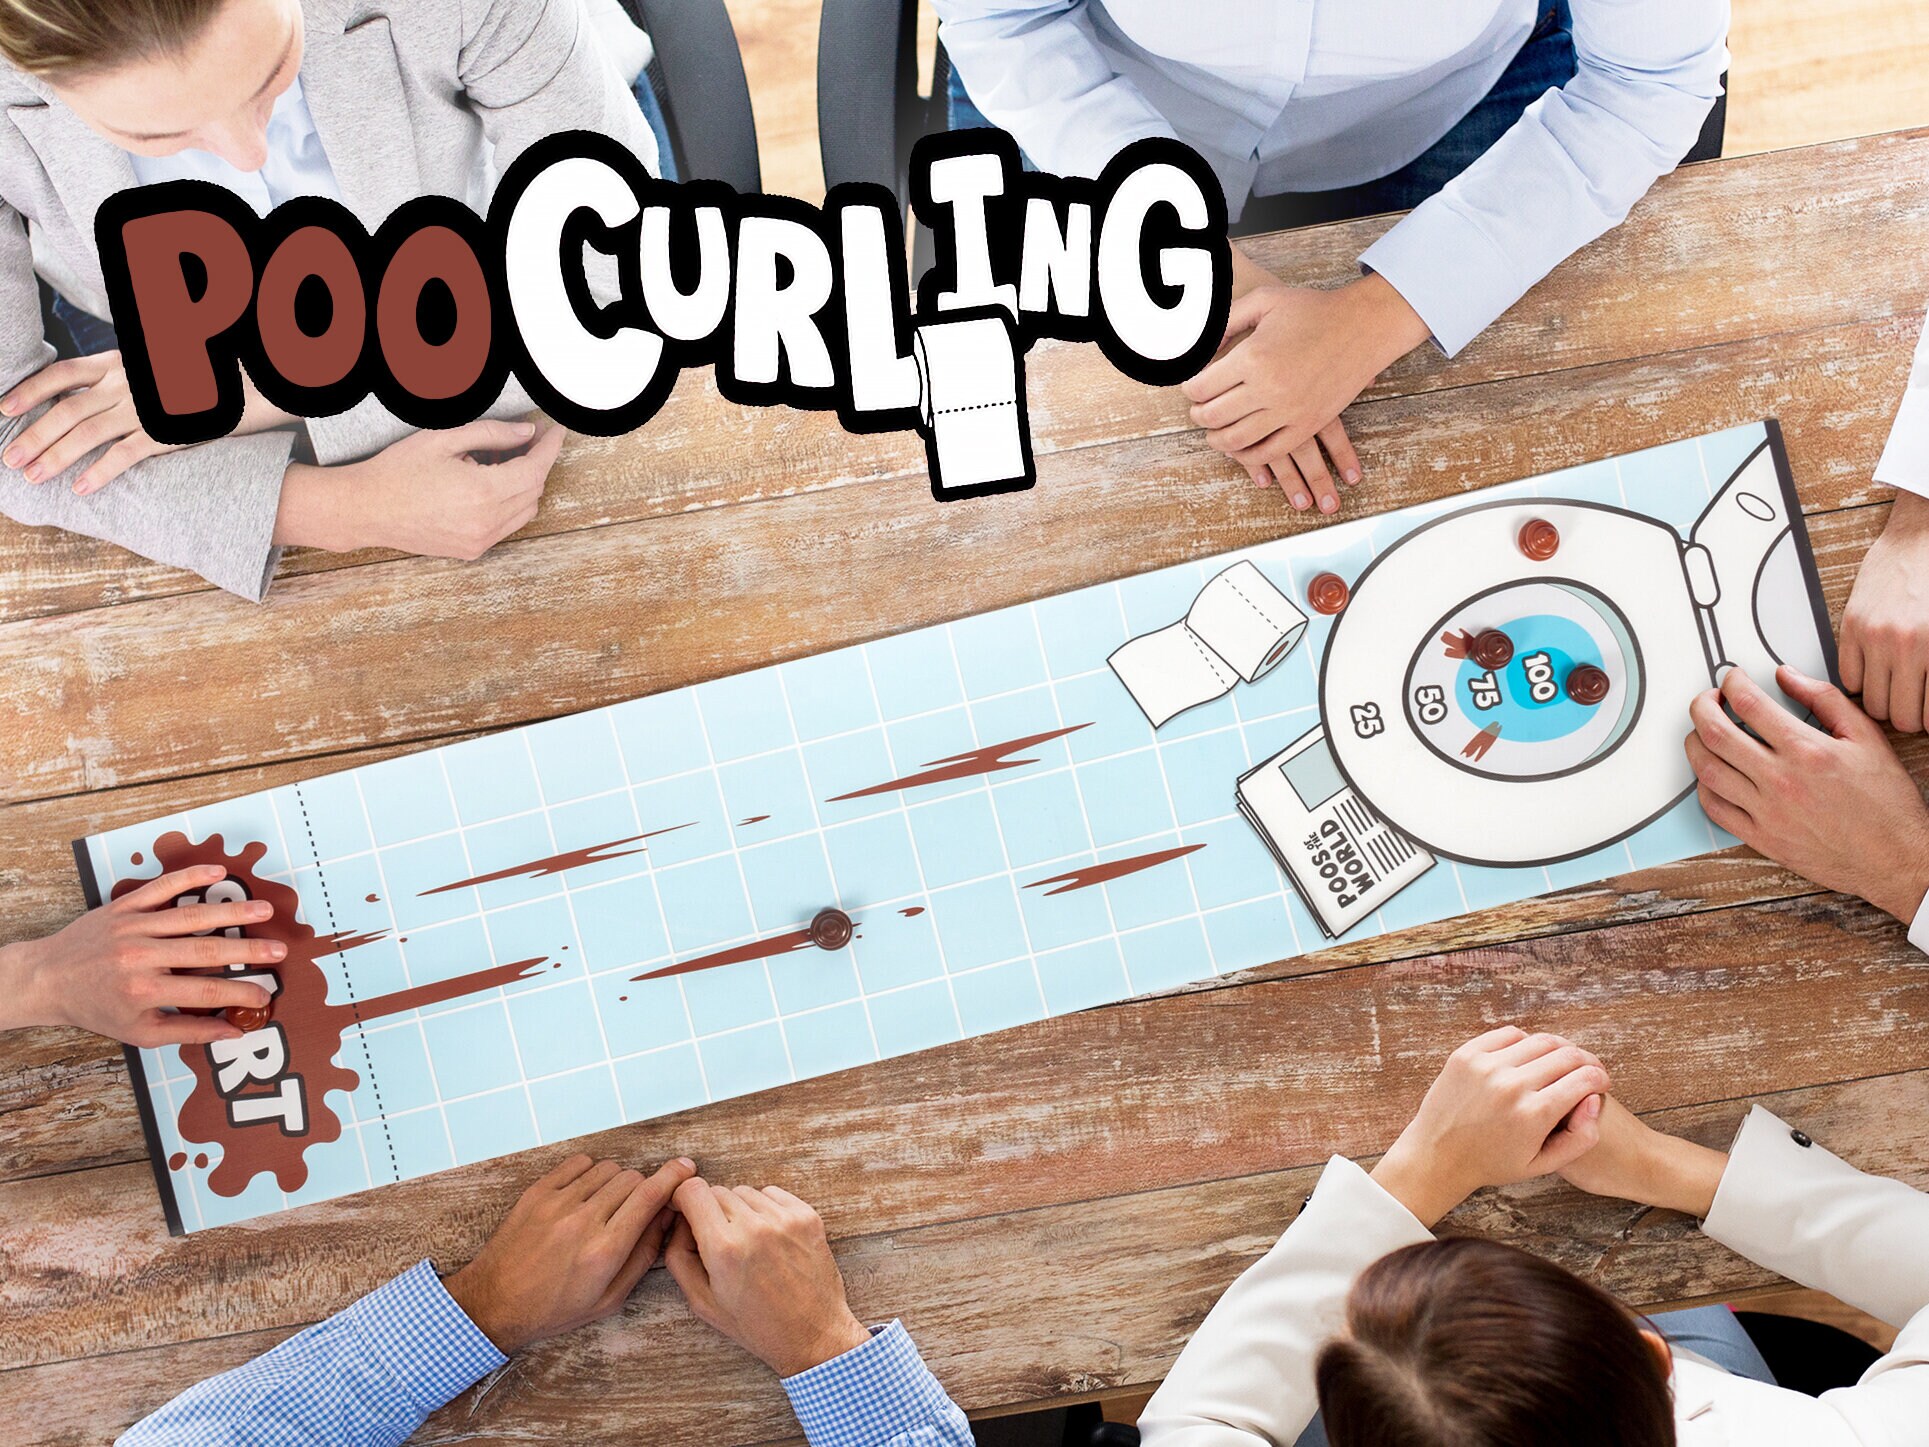 Poo Curling Spiel